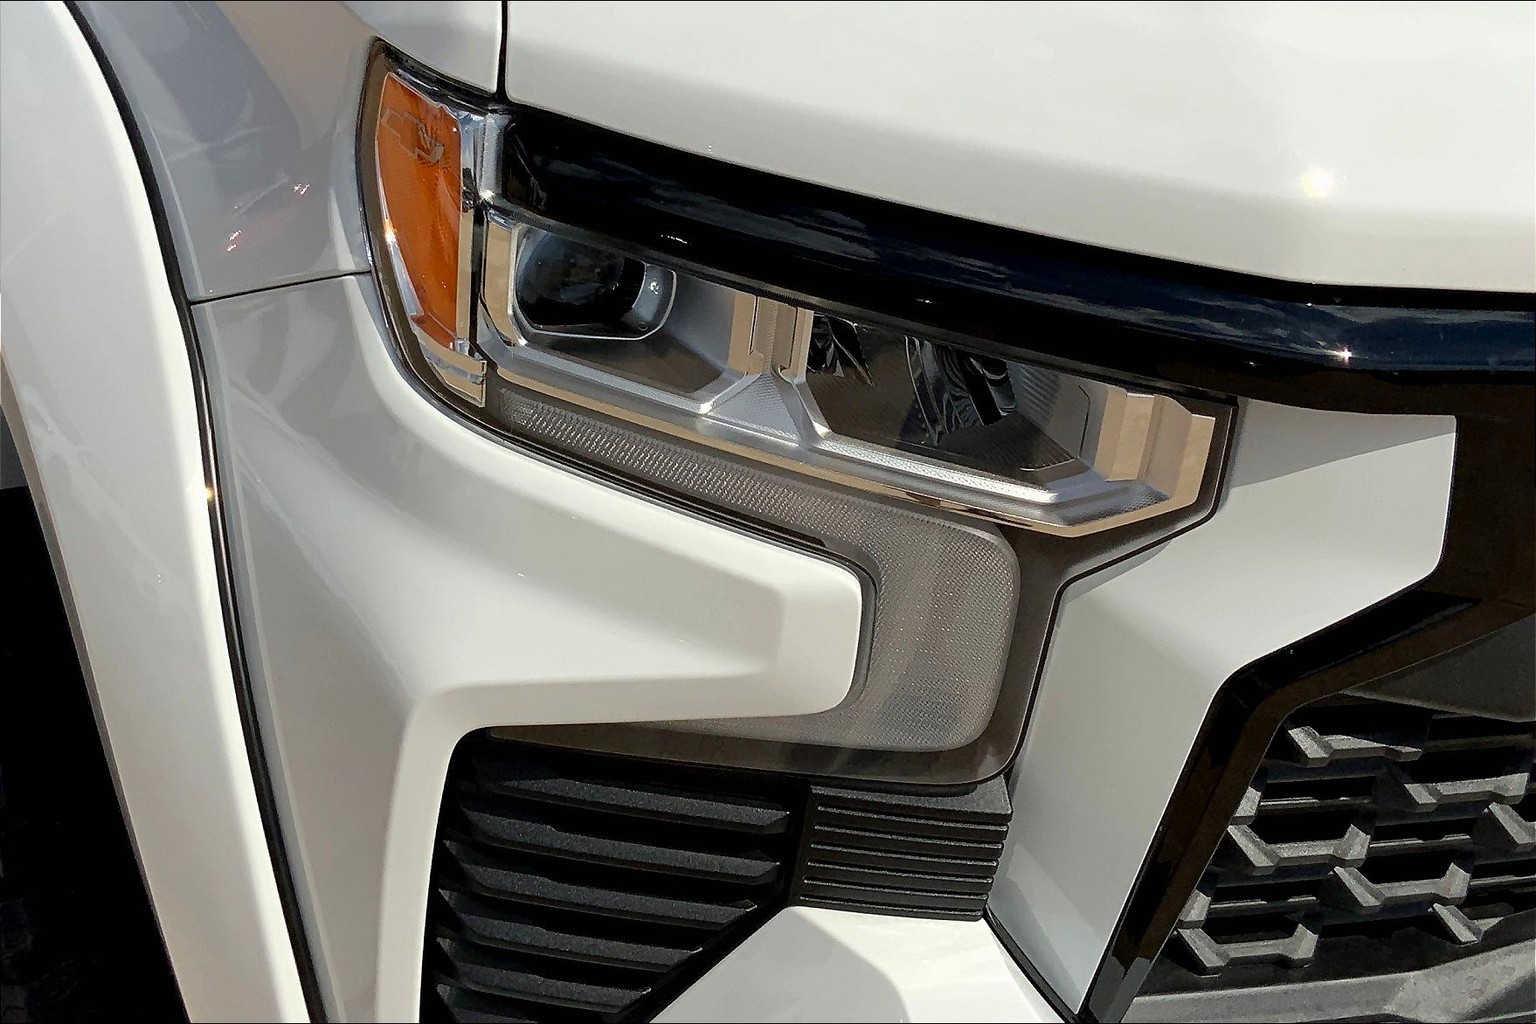 Reduced headlight glare lifts 2022 Mitsubishi Outlander to highest